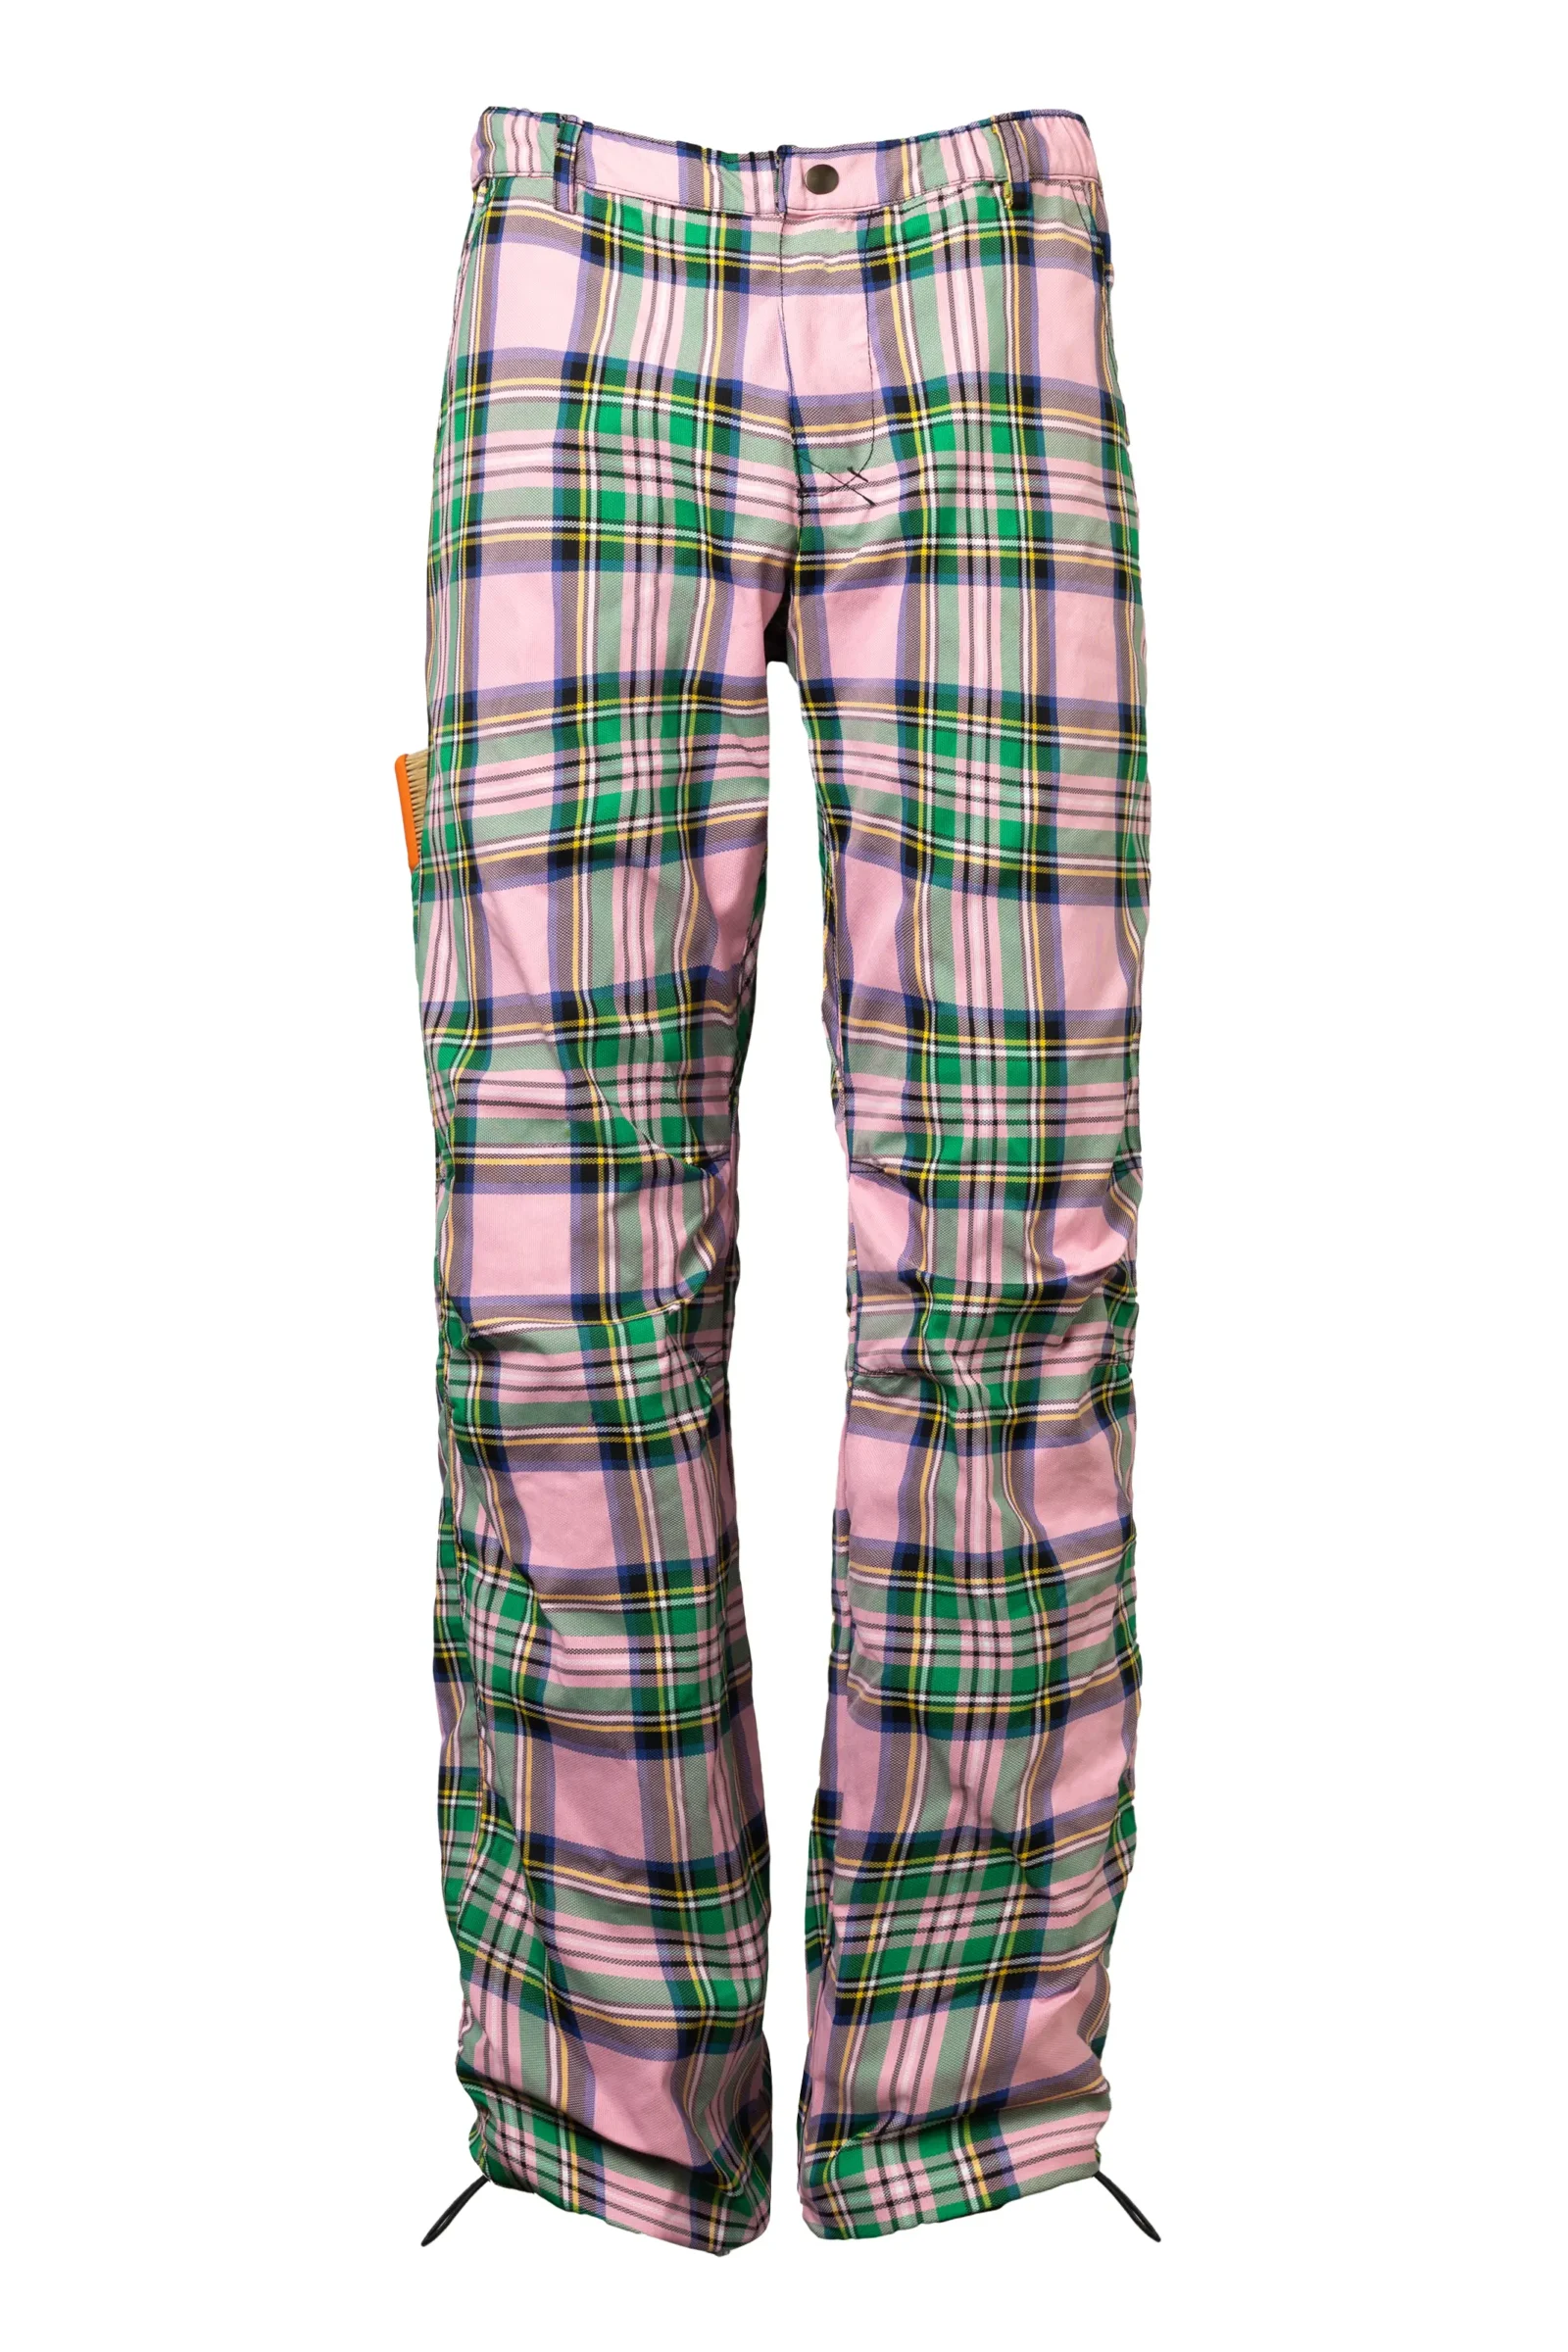 Pantalon imperméable homme en cordura tartan rose/vert - BILLY 2 - MONVIC